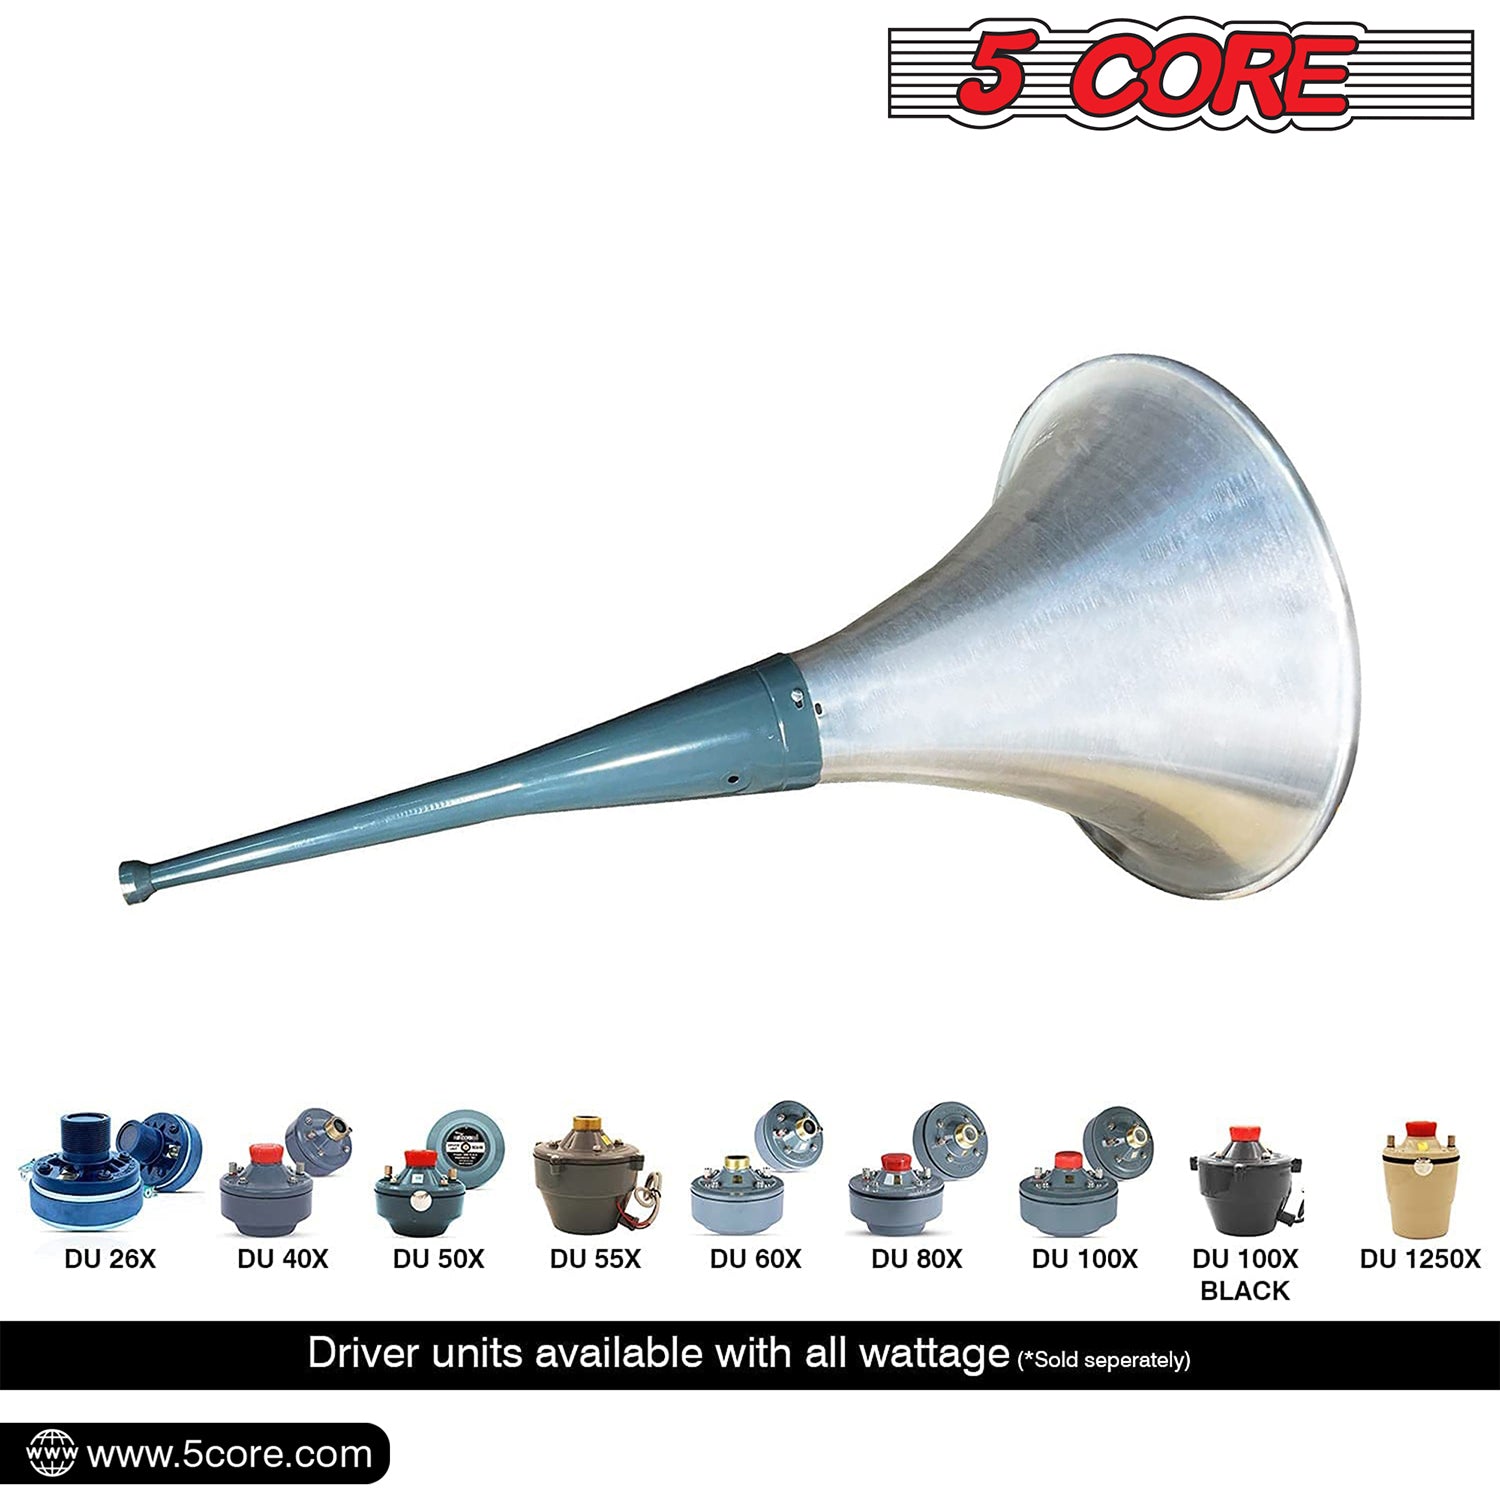 5Core PA Speaker Trumpet  Reflex Horn Throat 24" Aluminum Body  Support Most Compression Driver